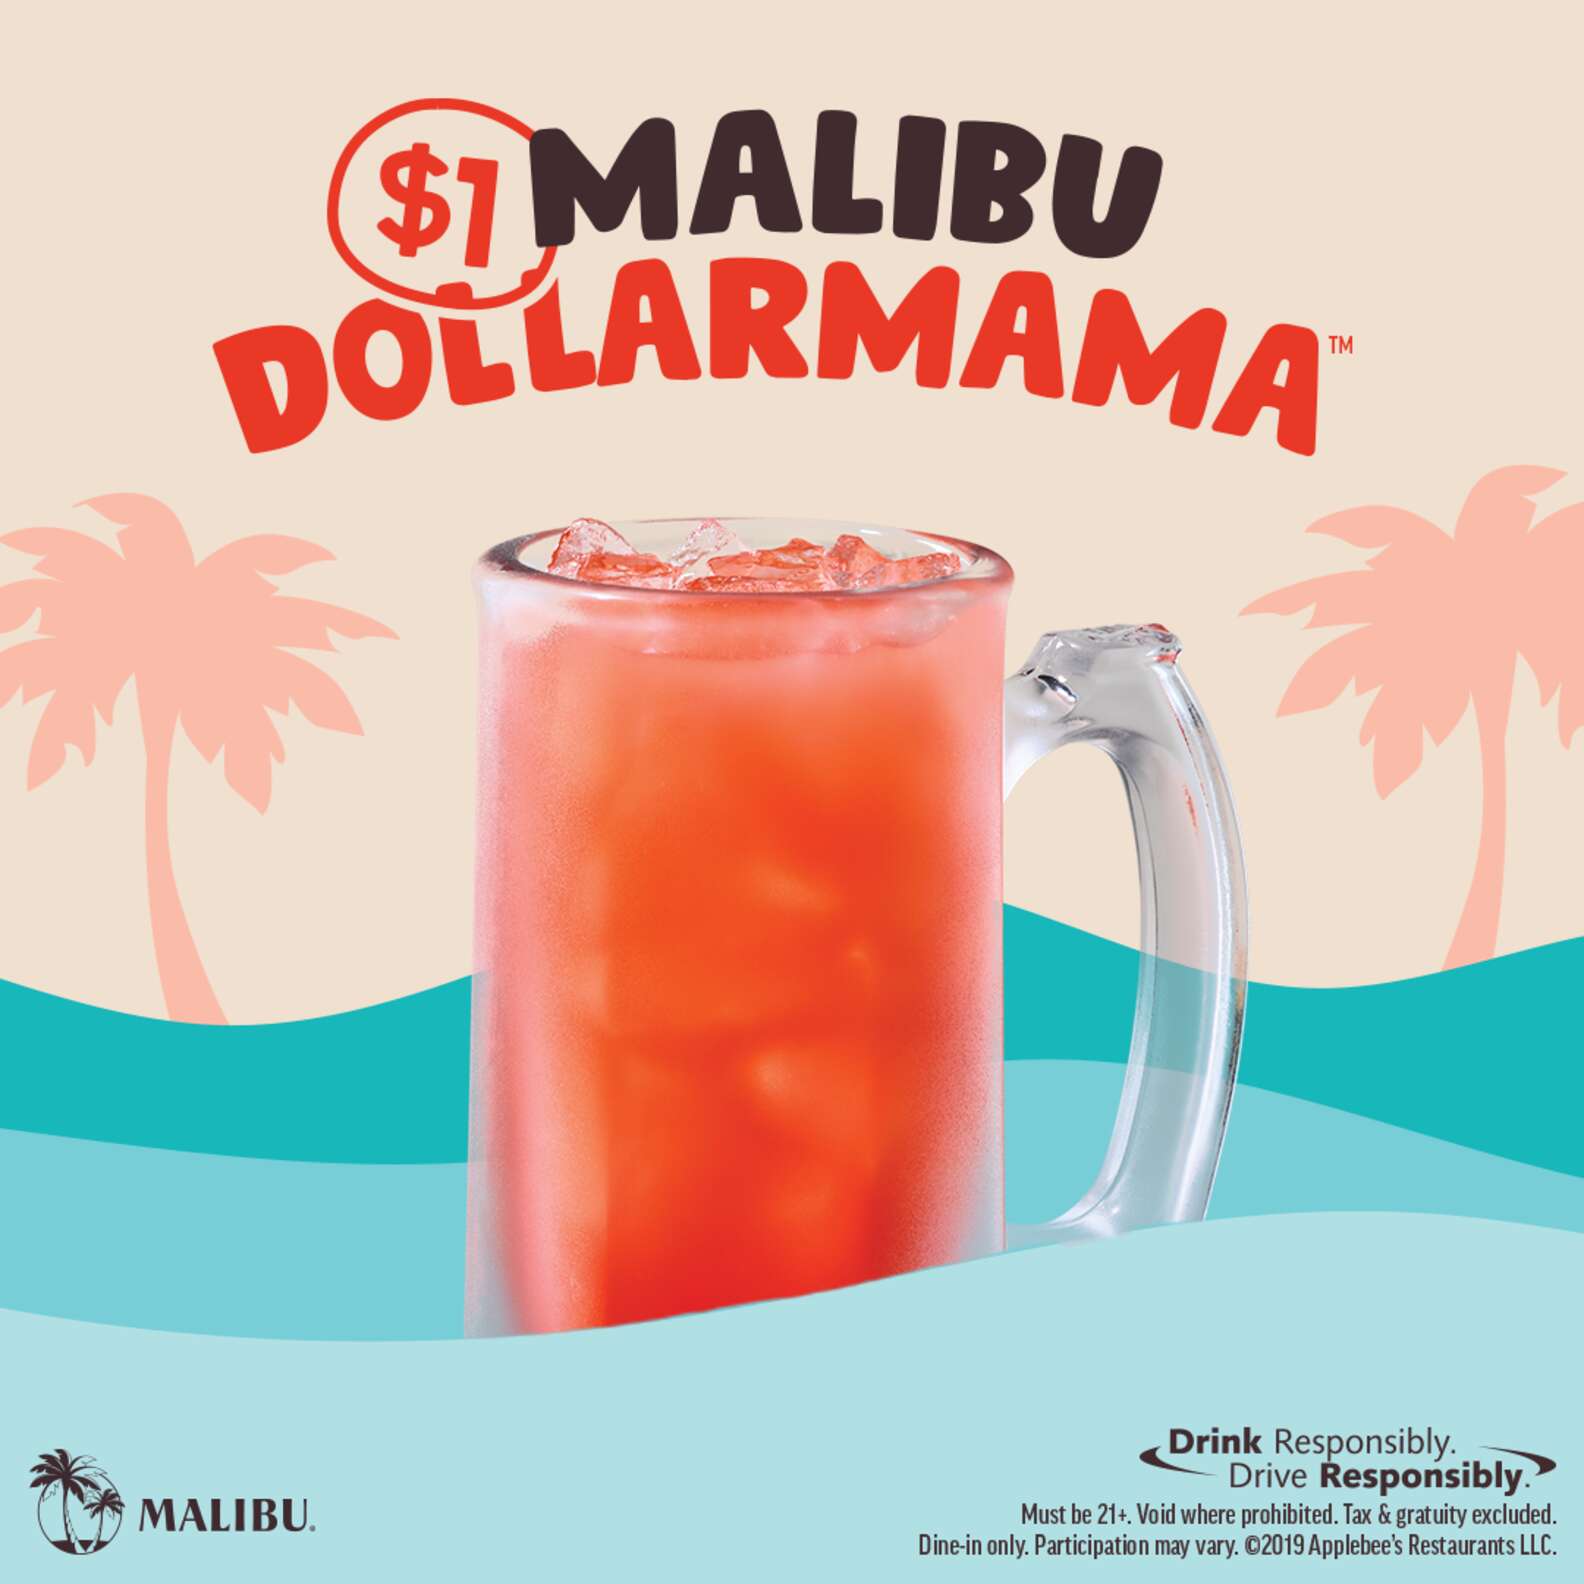 Applebee's 1 Drinks July 2019 How to Get 1 Malibu Dollarmamas